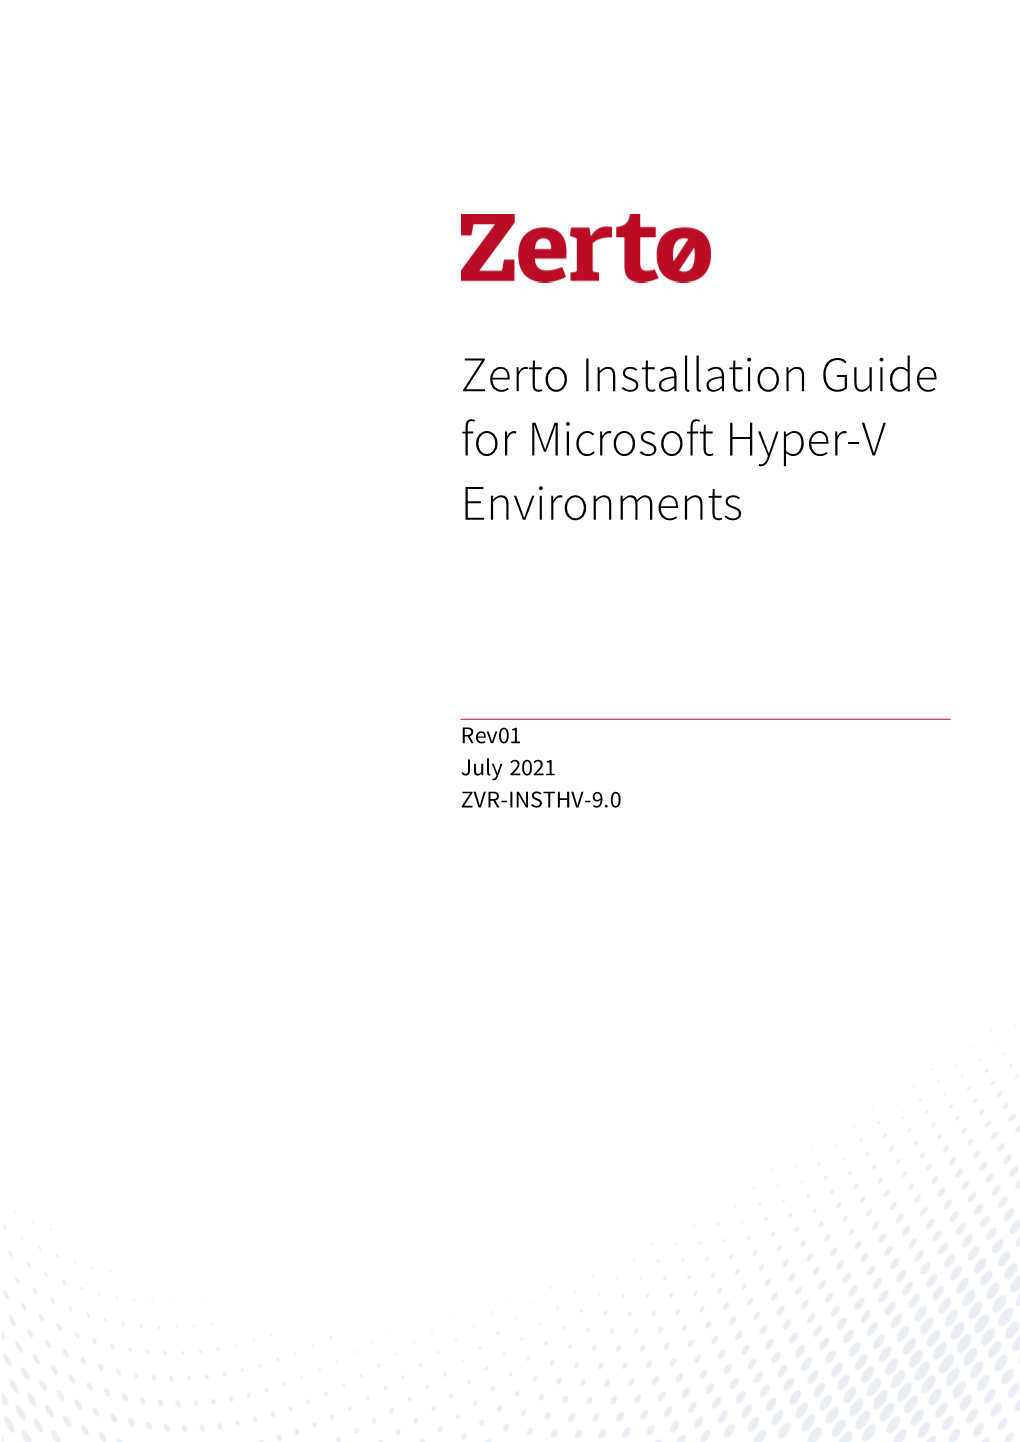 Zerto Installation Guide for Microsoft Hyper-V Environments